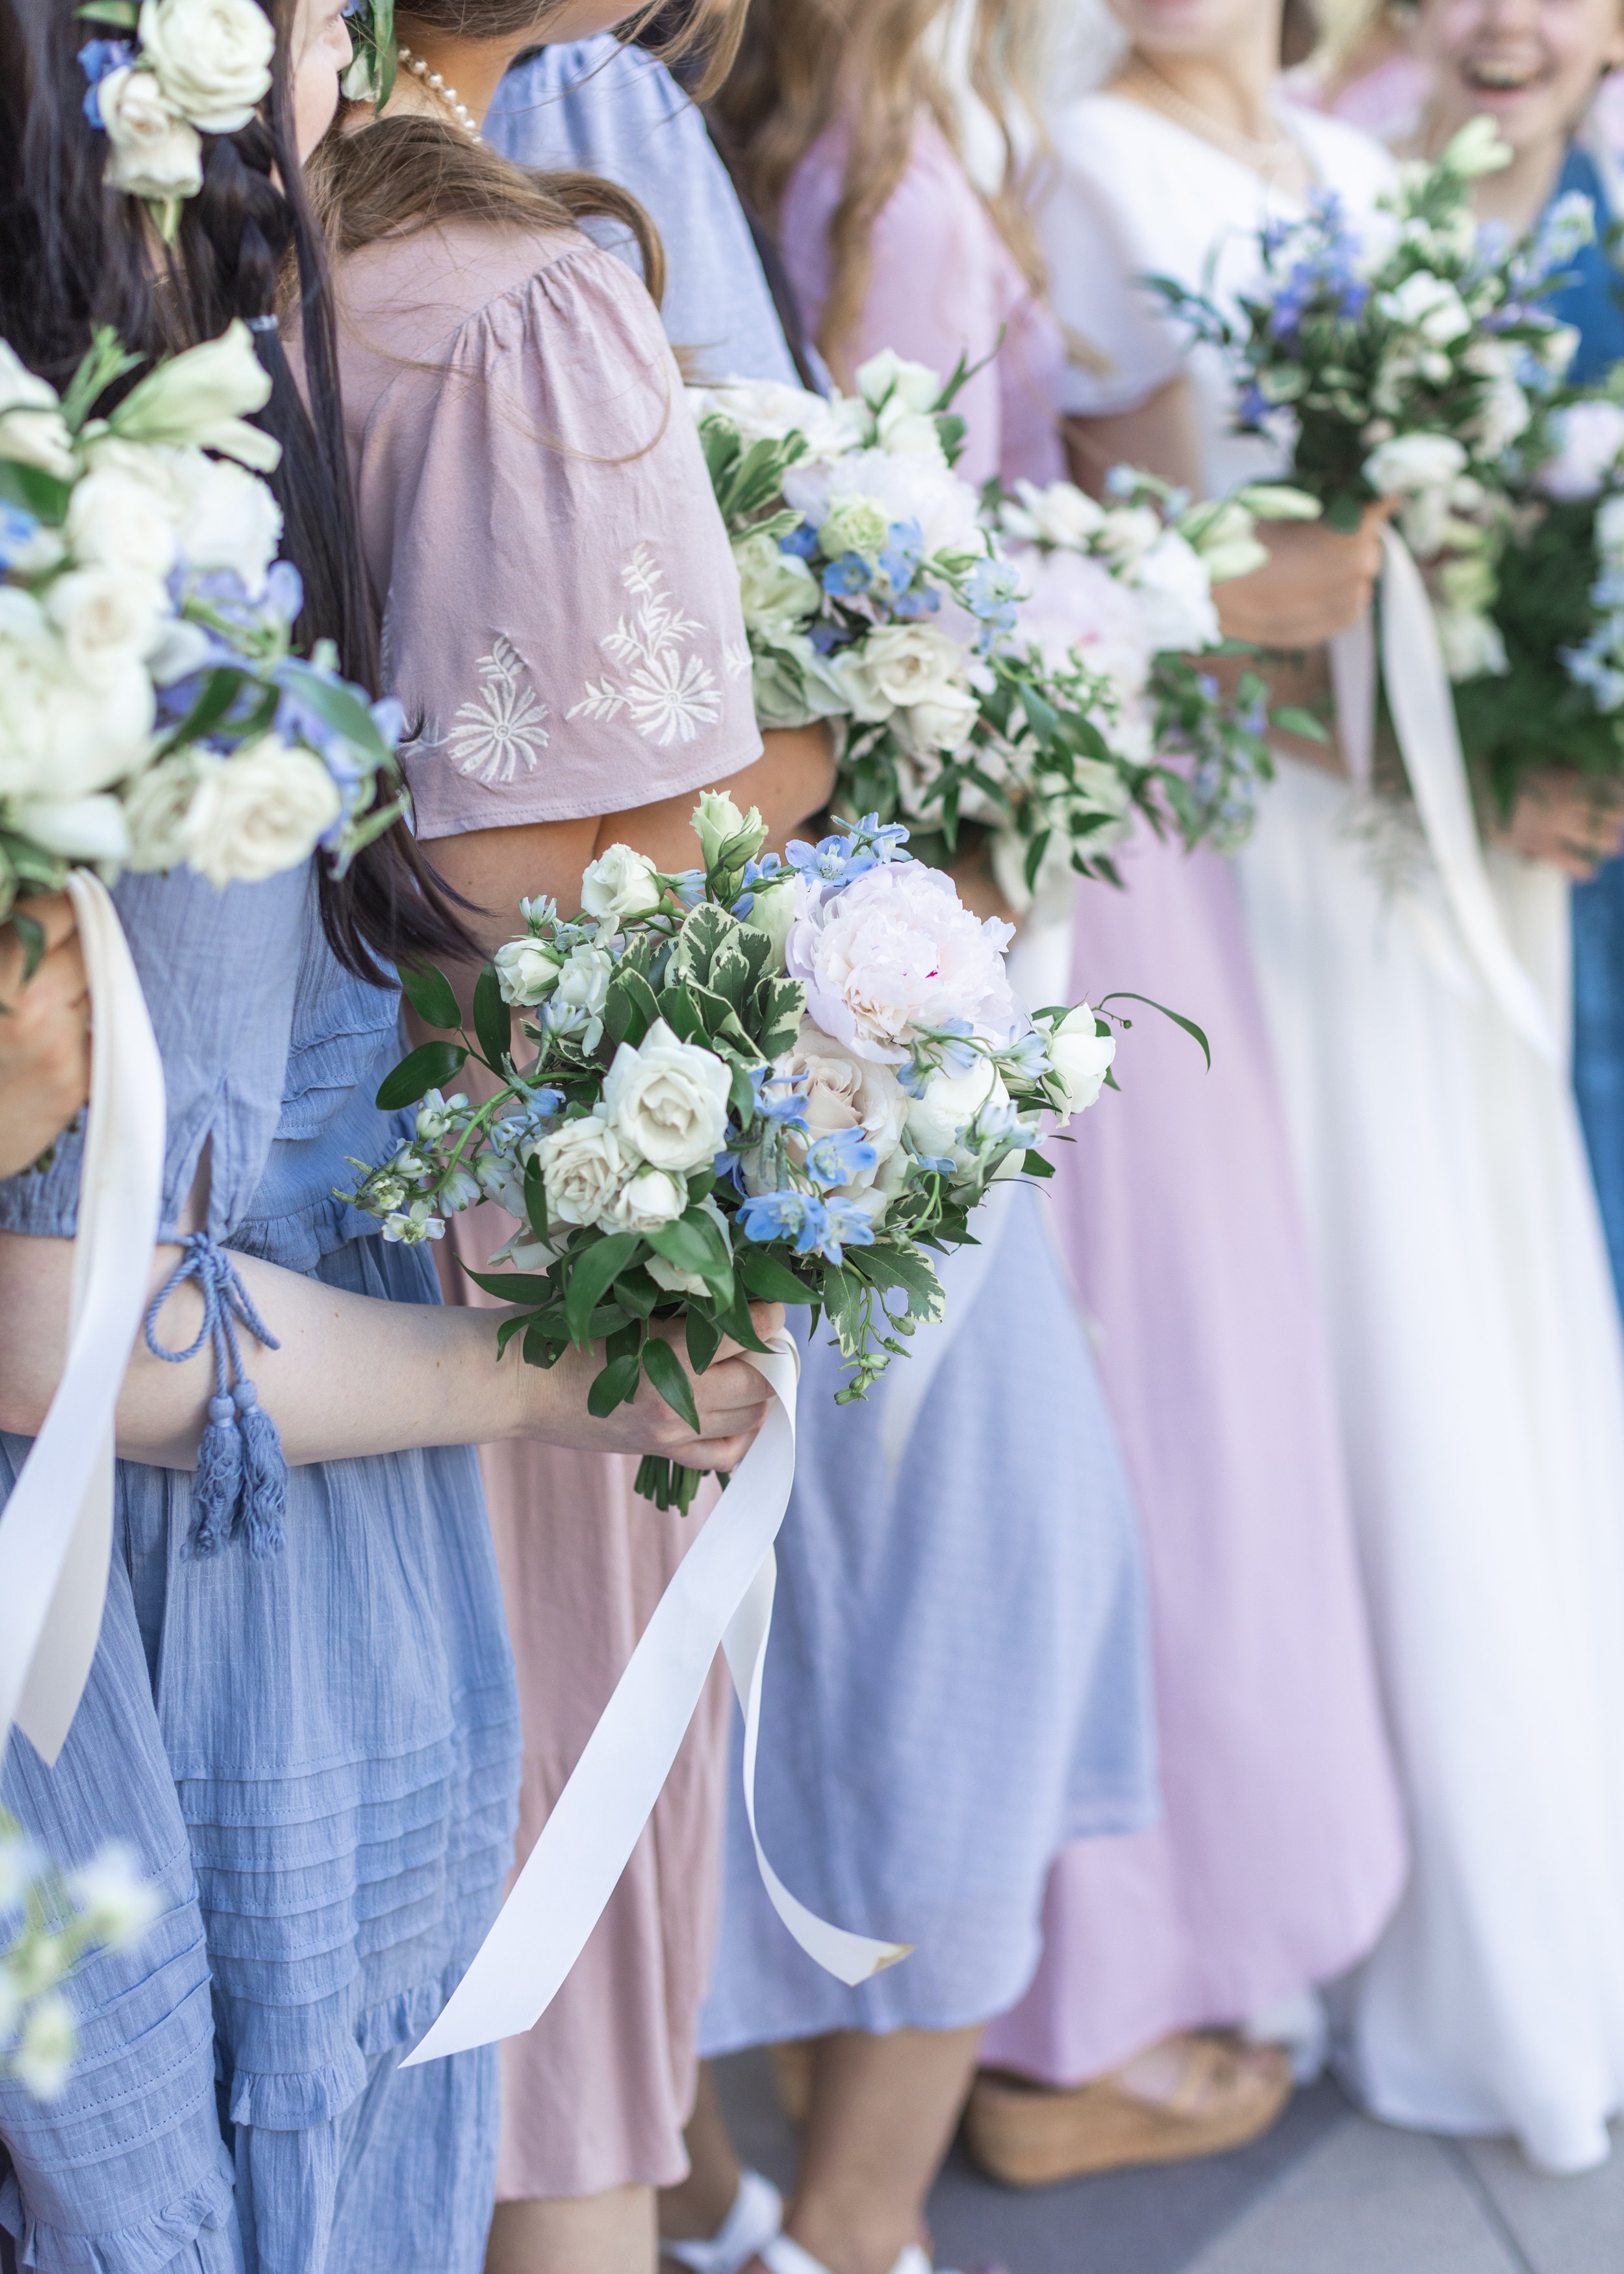  Bridesmaids holding their floral bouquets designed by Mille Fleur Design captured by Savanna Richardson Photography. bridesmaid bouquet #savannarichardsonphotography #utahvendor #utahweddingphotographer #MilleFleurDesign #Utahweddingdesigns 